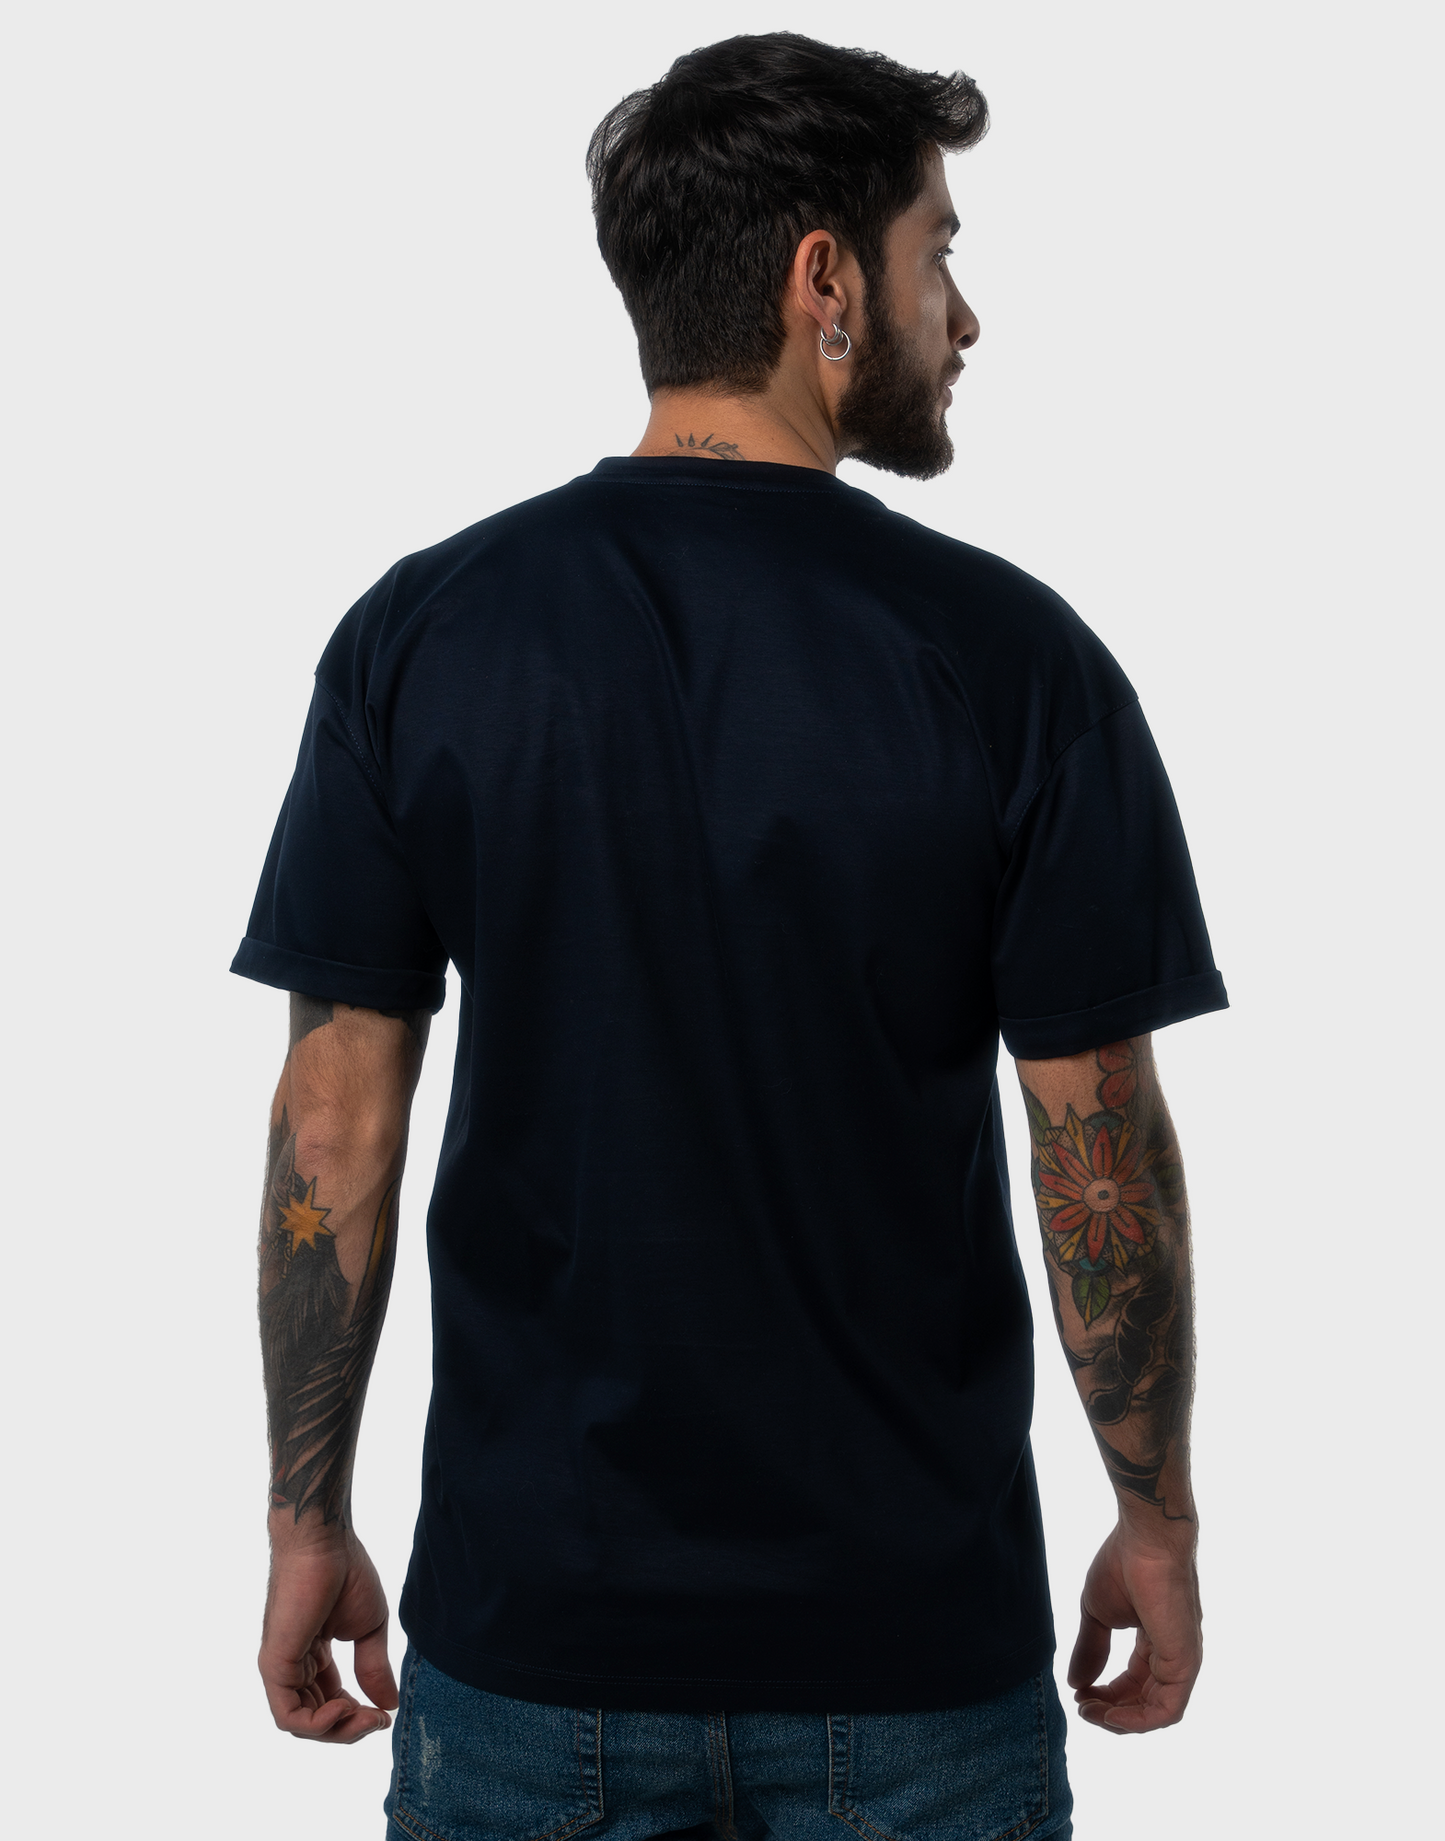 Camiseta hombre Bordado BEREKET - N/C